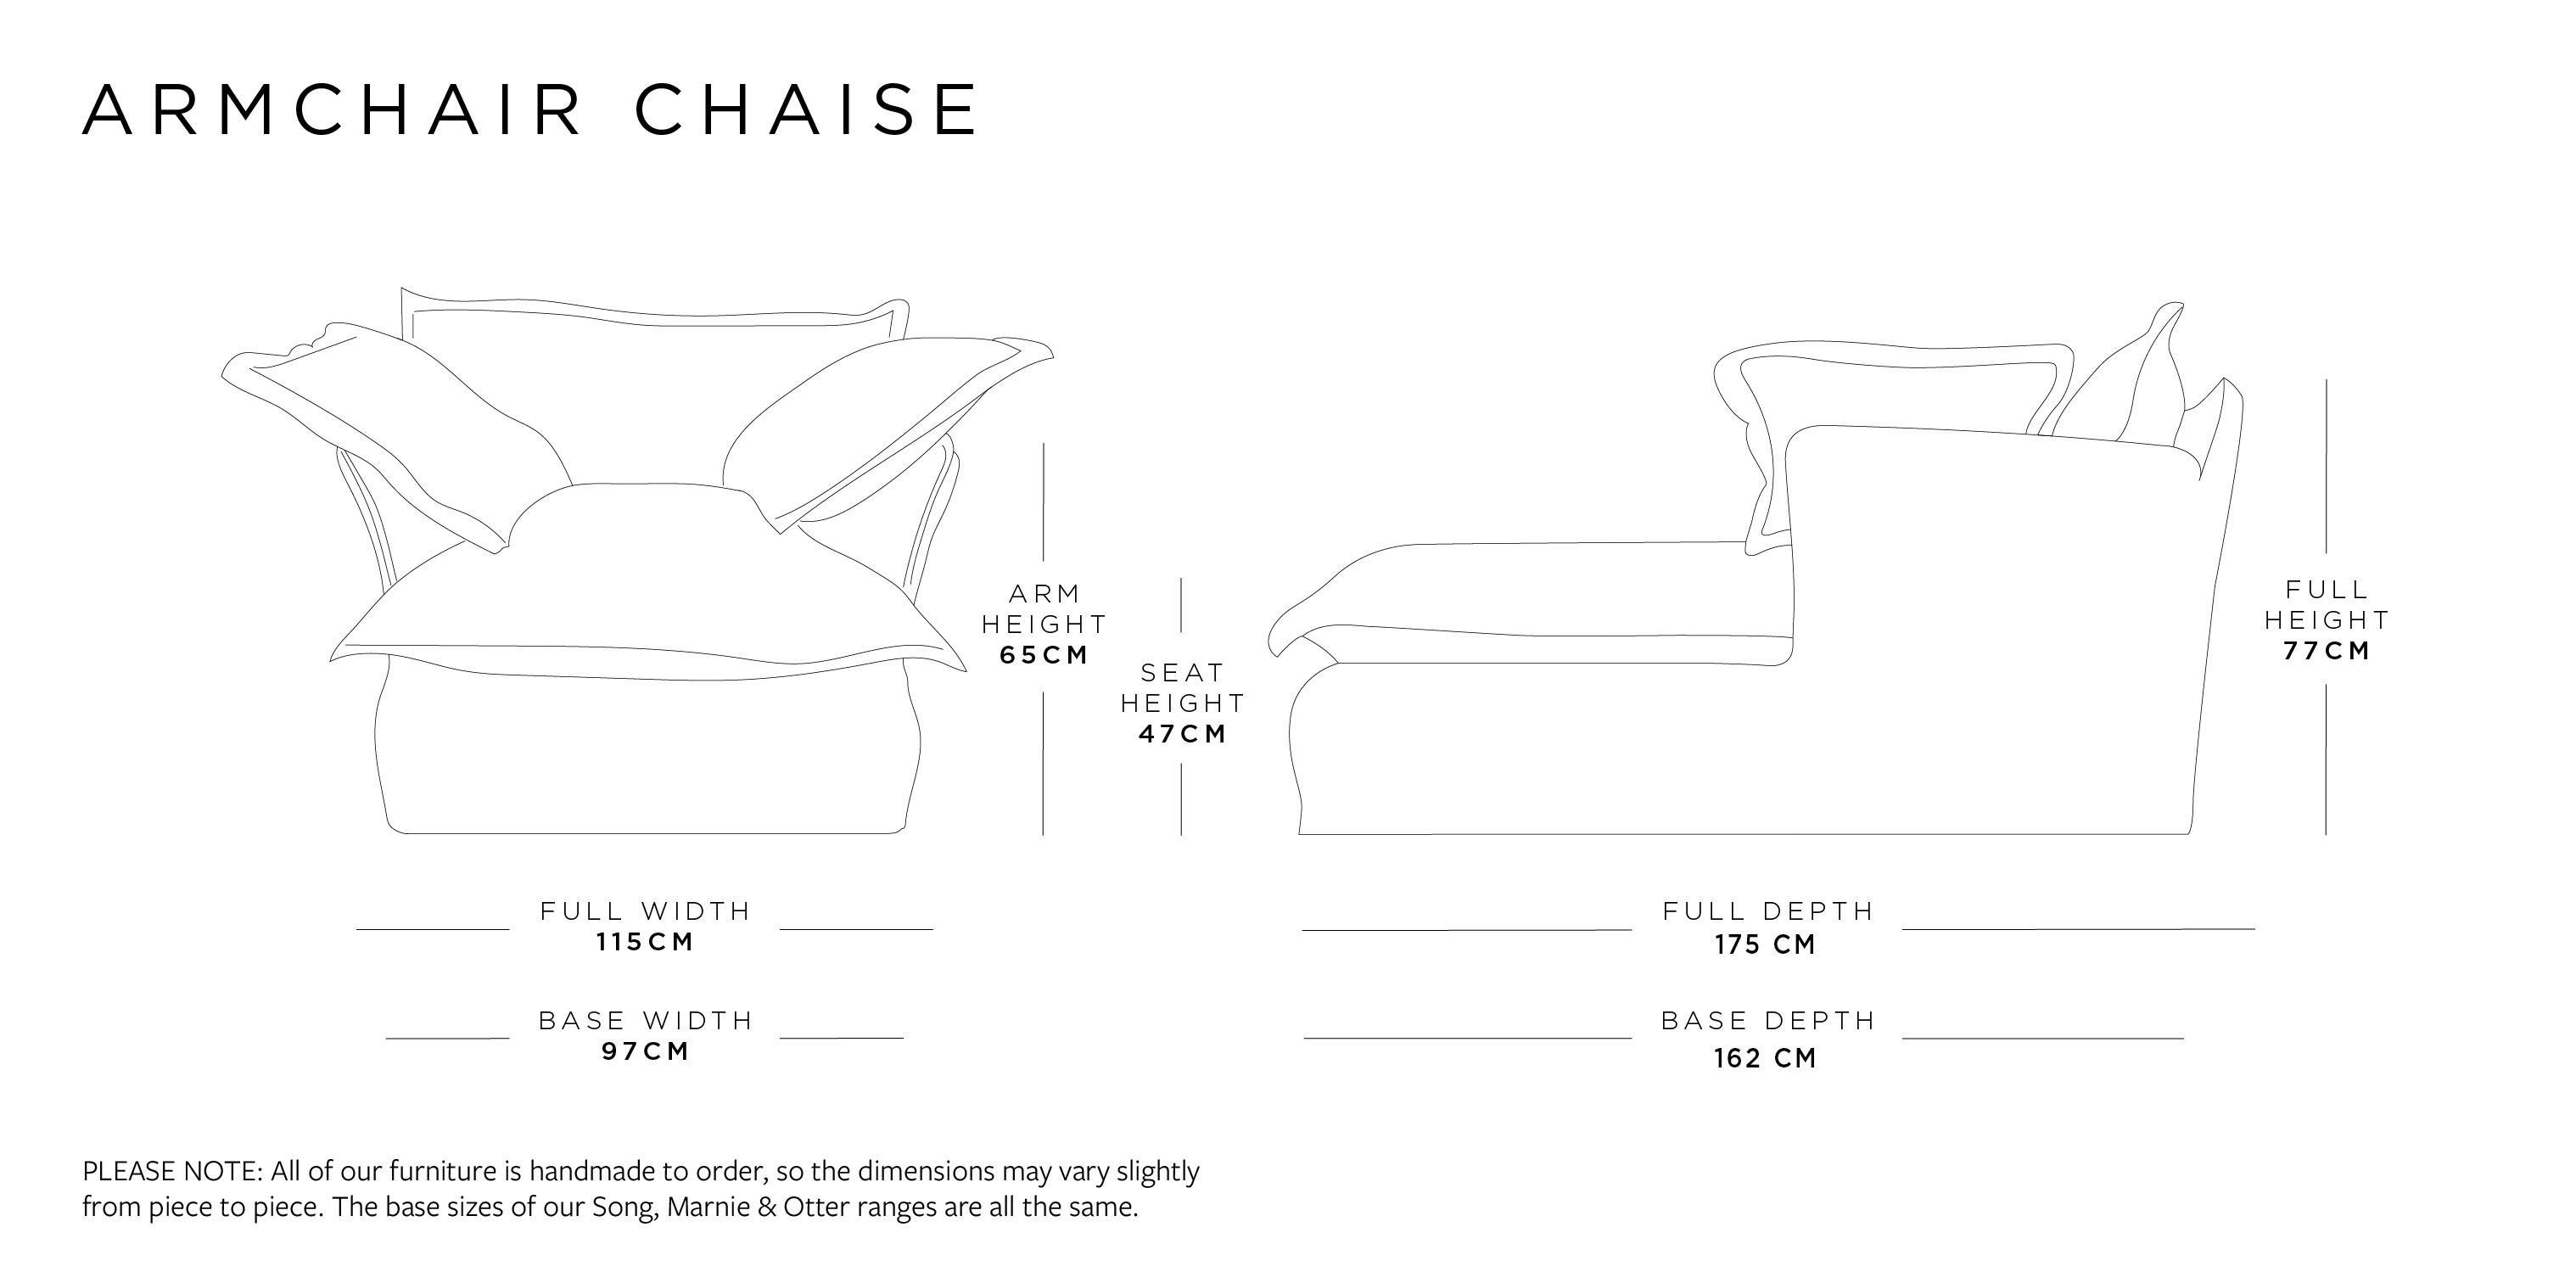 Armchair Chaise | Marnie Range Size Guide